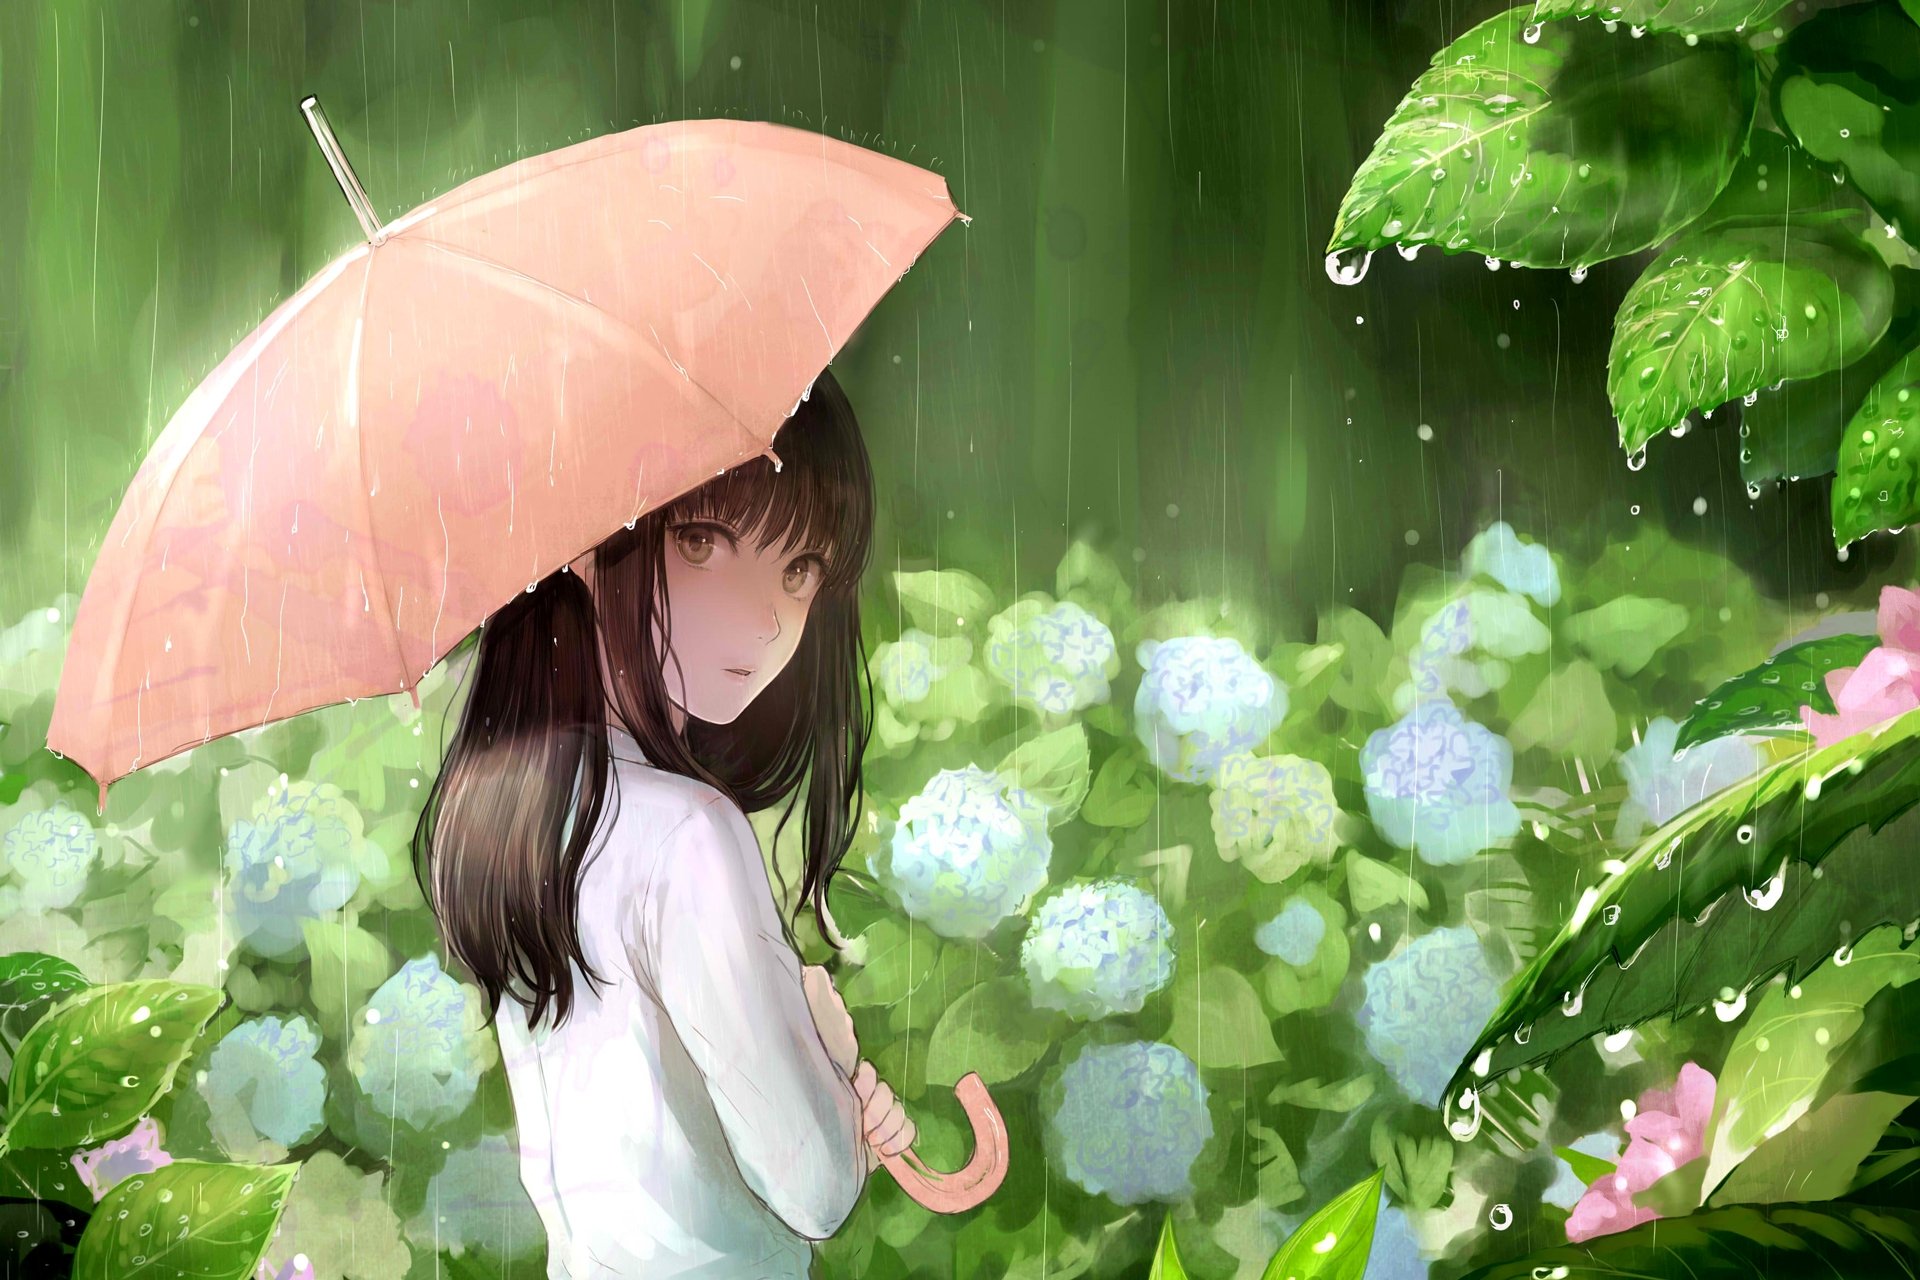 Anime Girl Umbrella Flower Pretty Cute Spring Rain Wallpapers Hd Desktop And Mobile